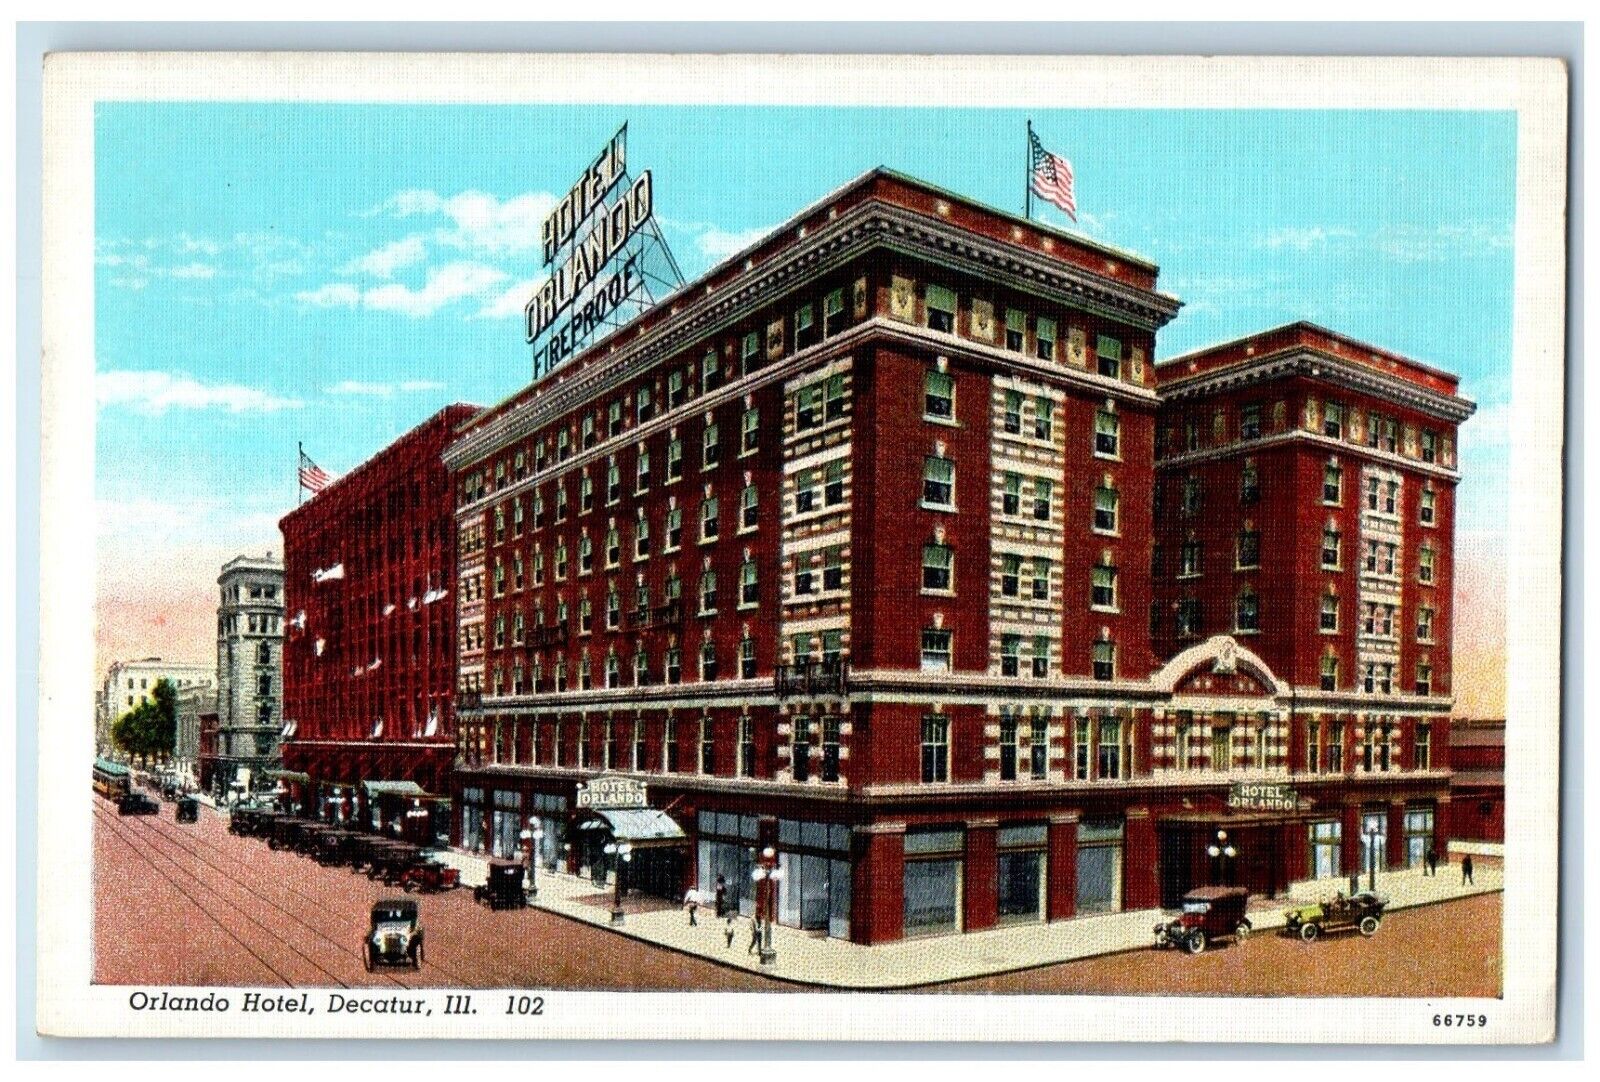 c1940 Orlando Hotel Exterior Building Decatur Illinois Vintage Antique Postcard